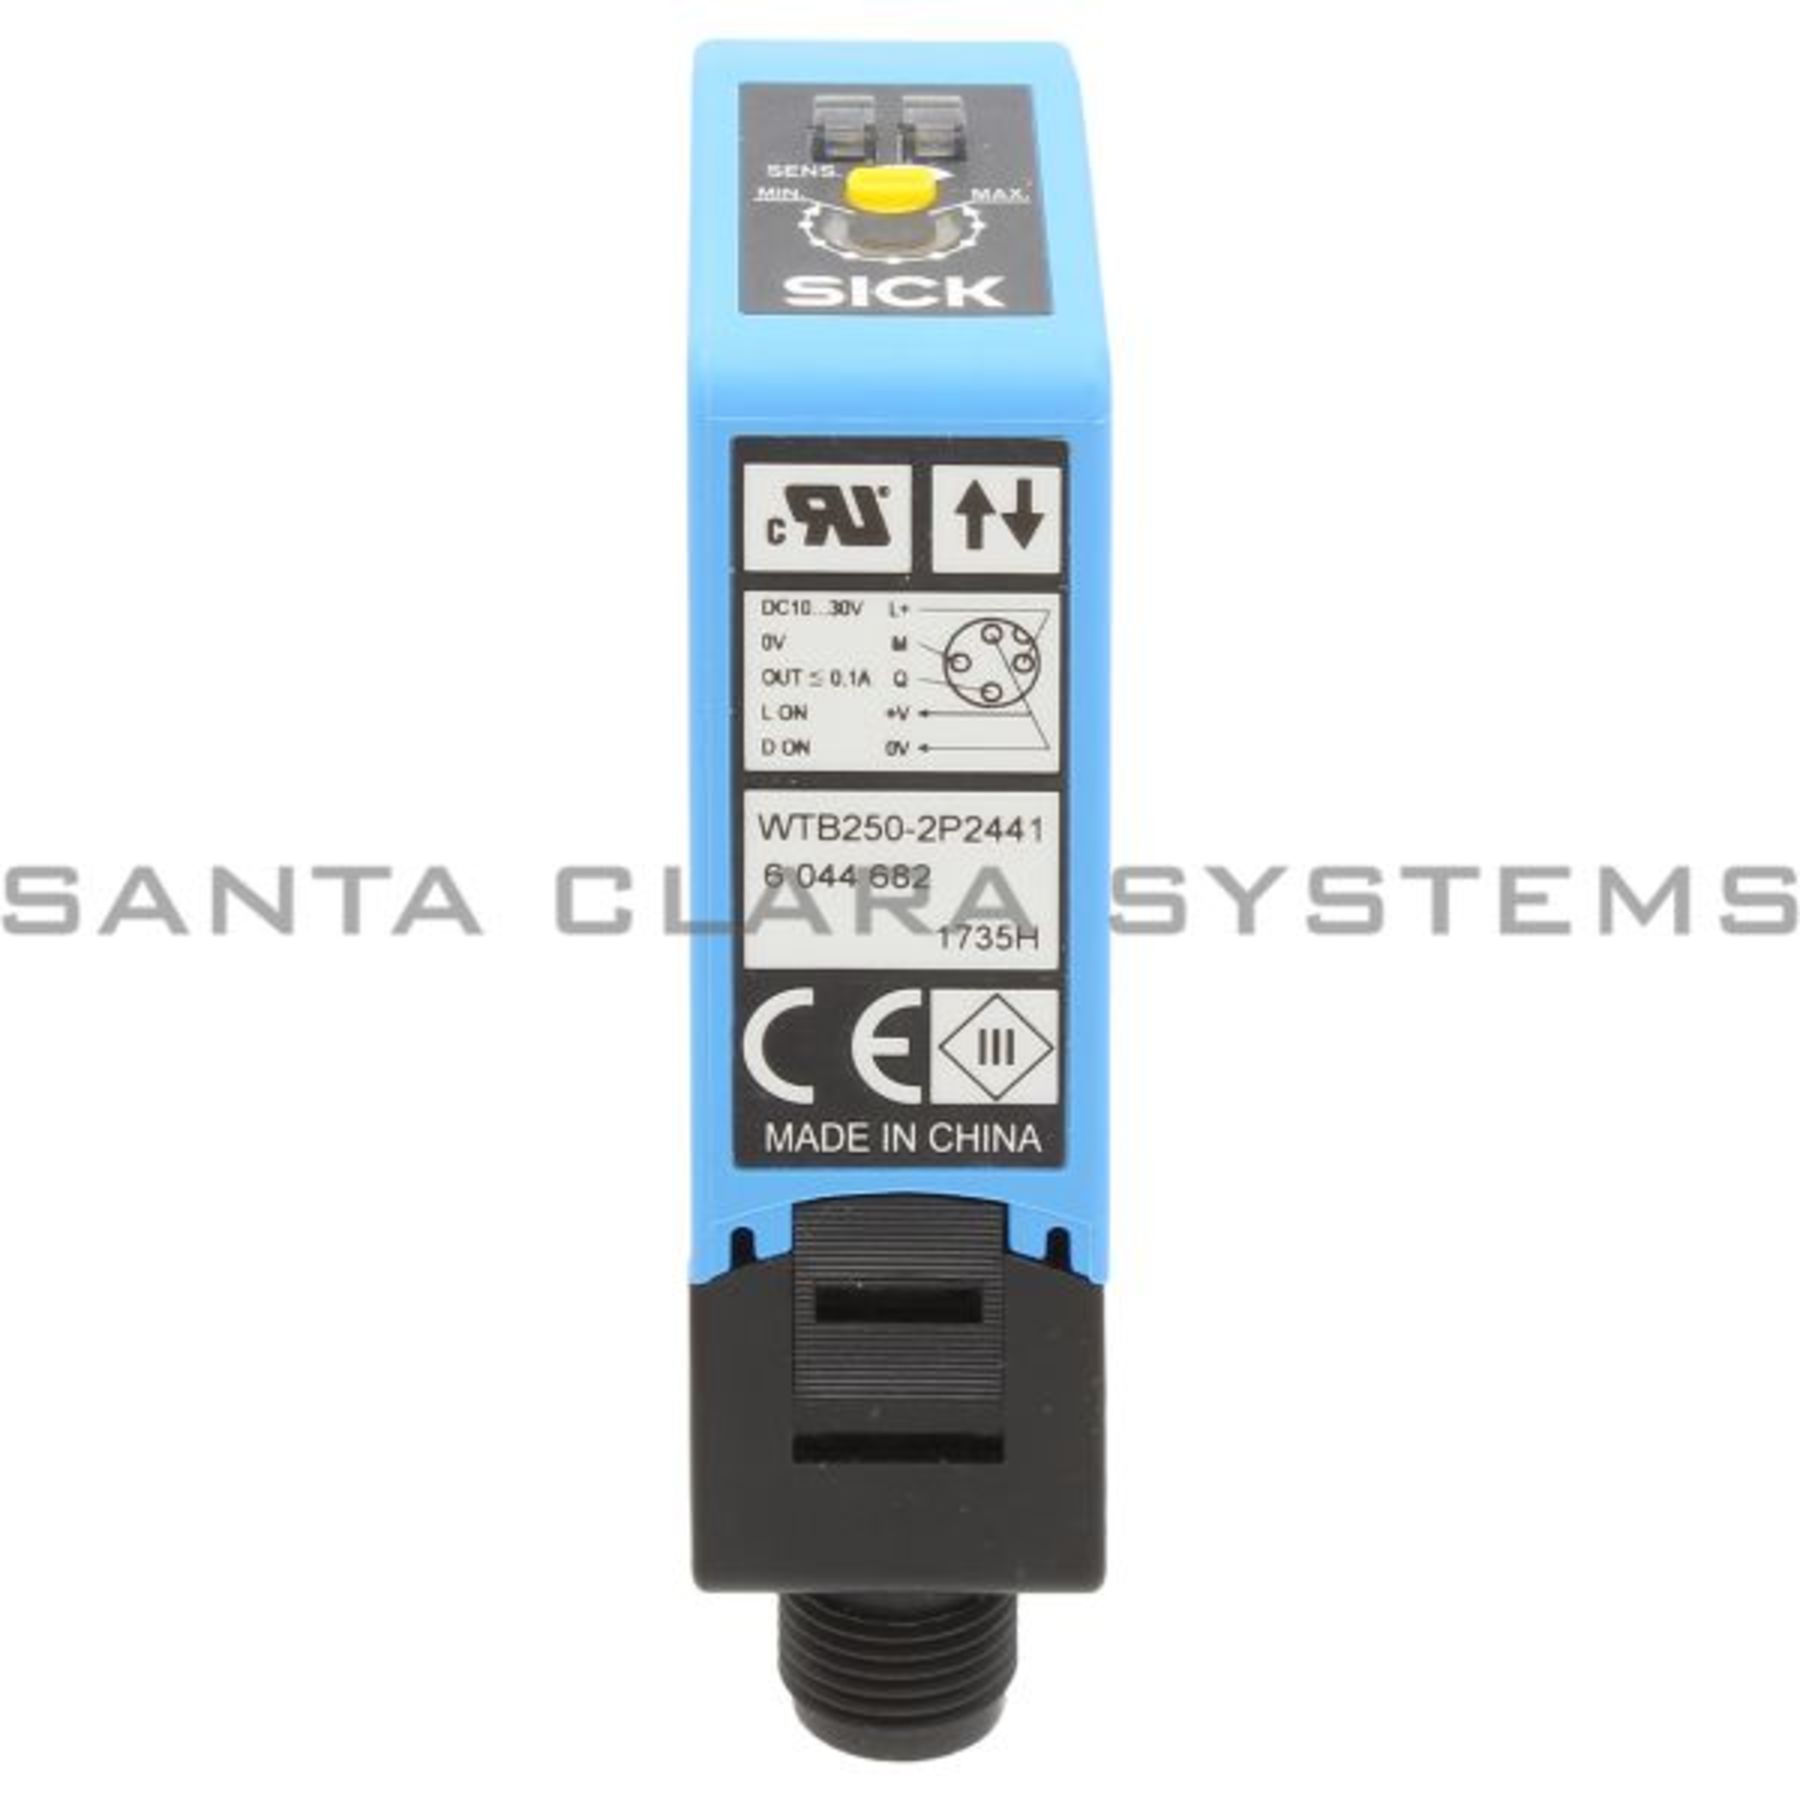 Sick Photoelectric Sensor Switch WTB250-2P2441 No.6044682 